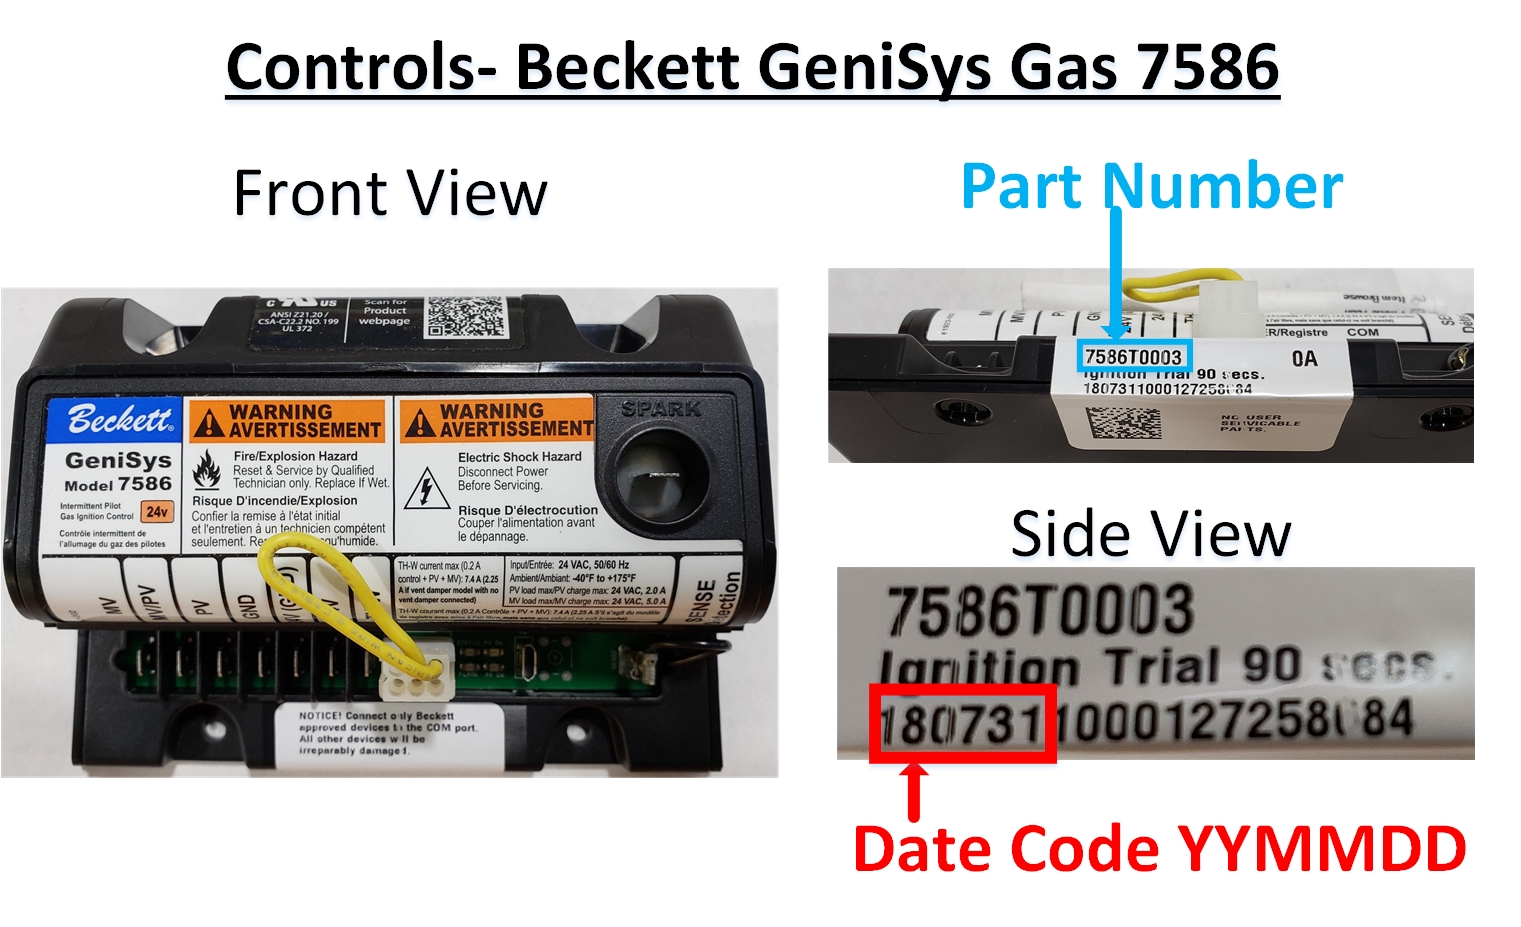 GeniSys Gas Intermittent Pilot Control (7586)